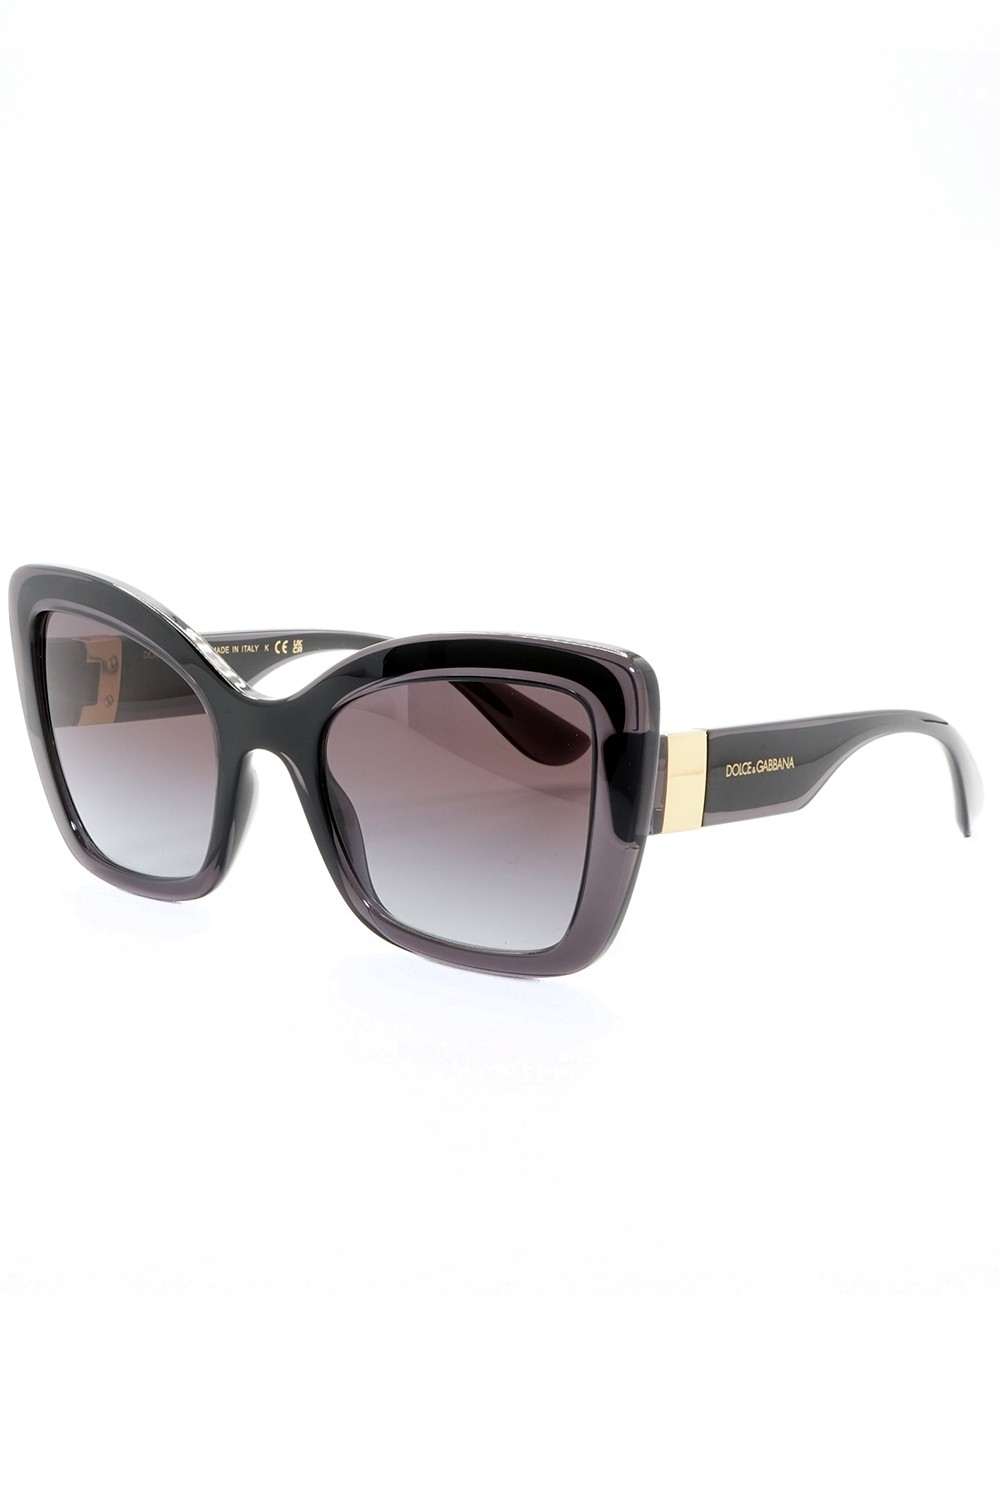 Dolce&Gabbana - Occhiali da sole in celluloide cat eye per donna nero - DG6170